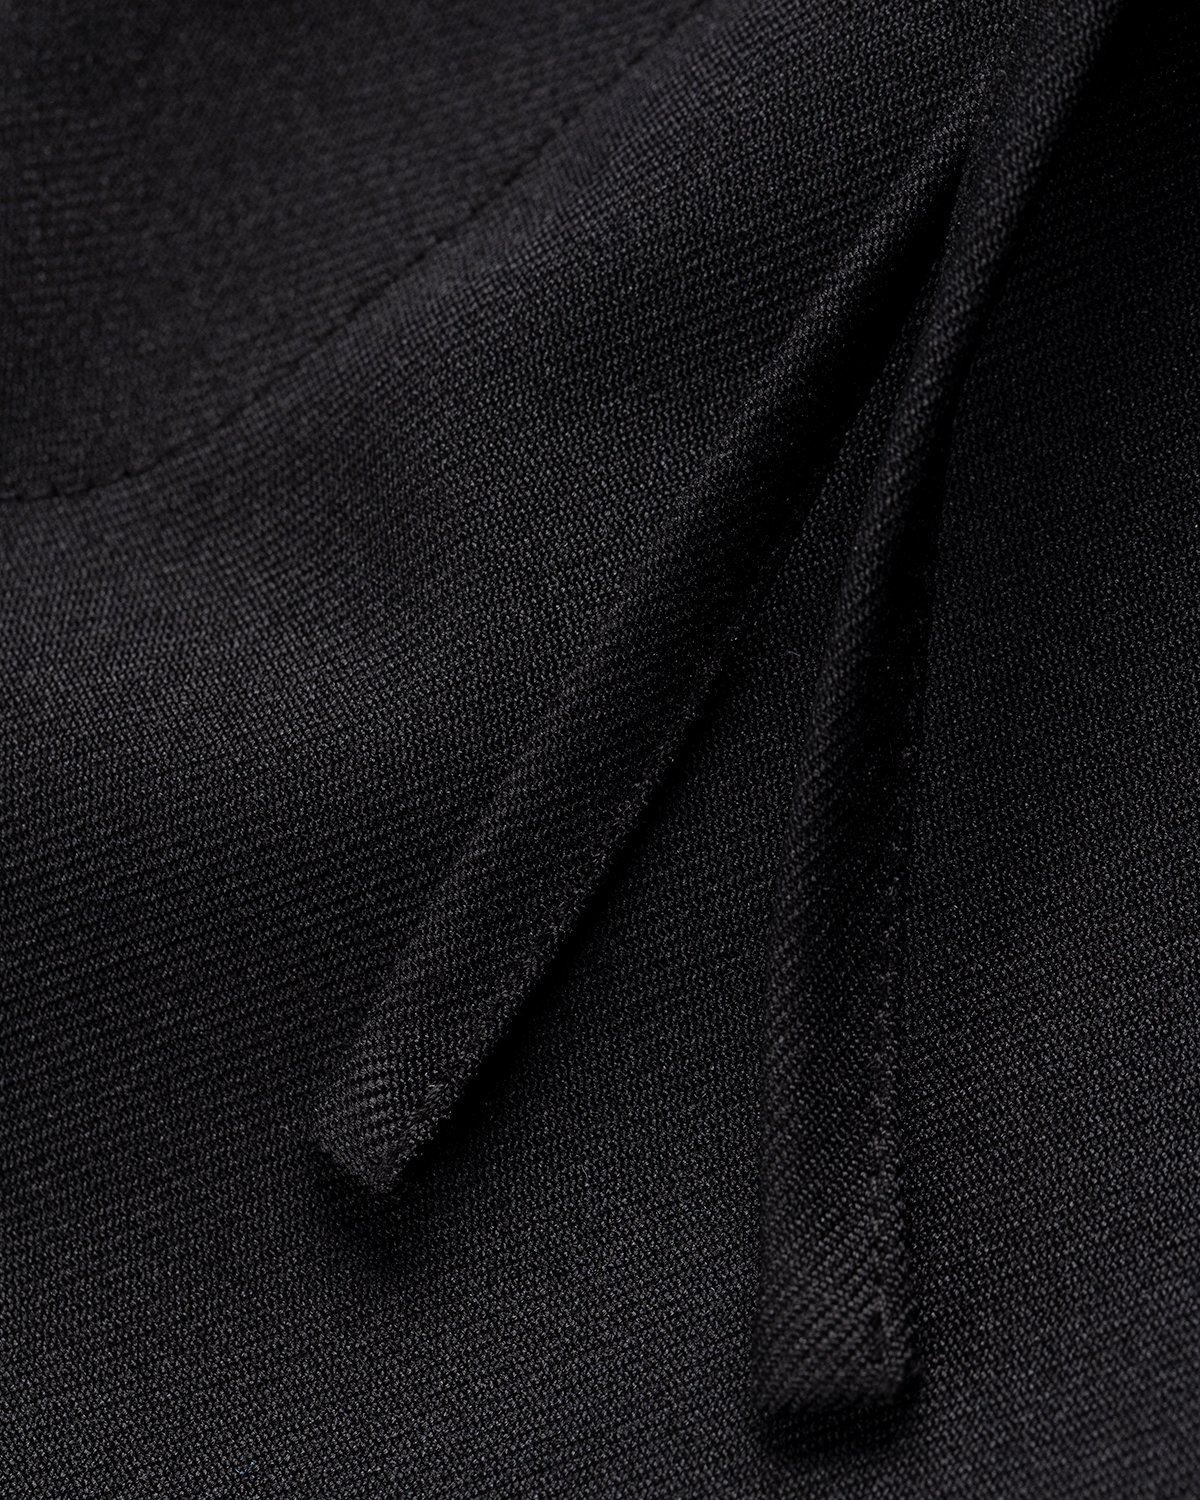 Jil Sander - Trouser D 09 AW 20 Black - Clothing - Black - Image 7